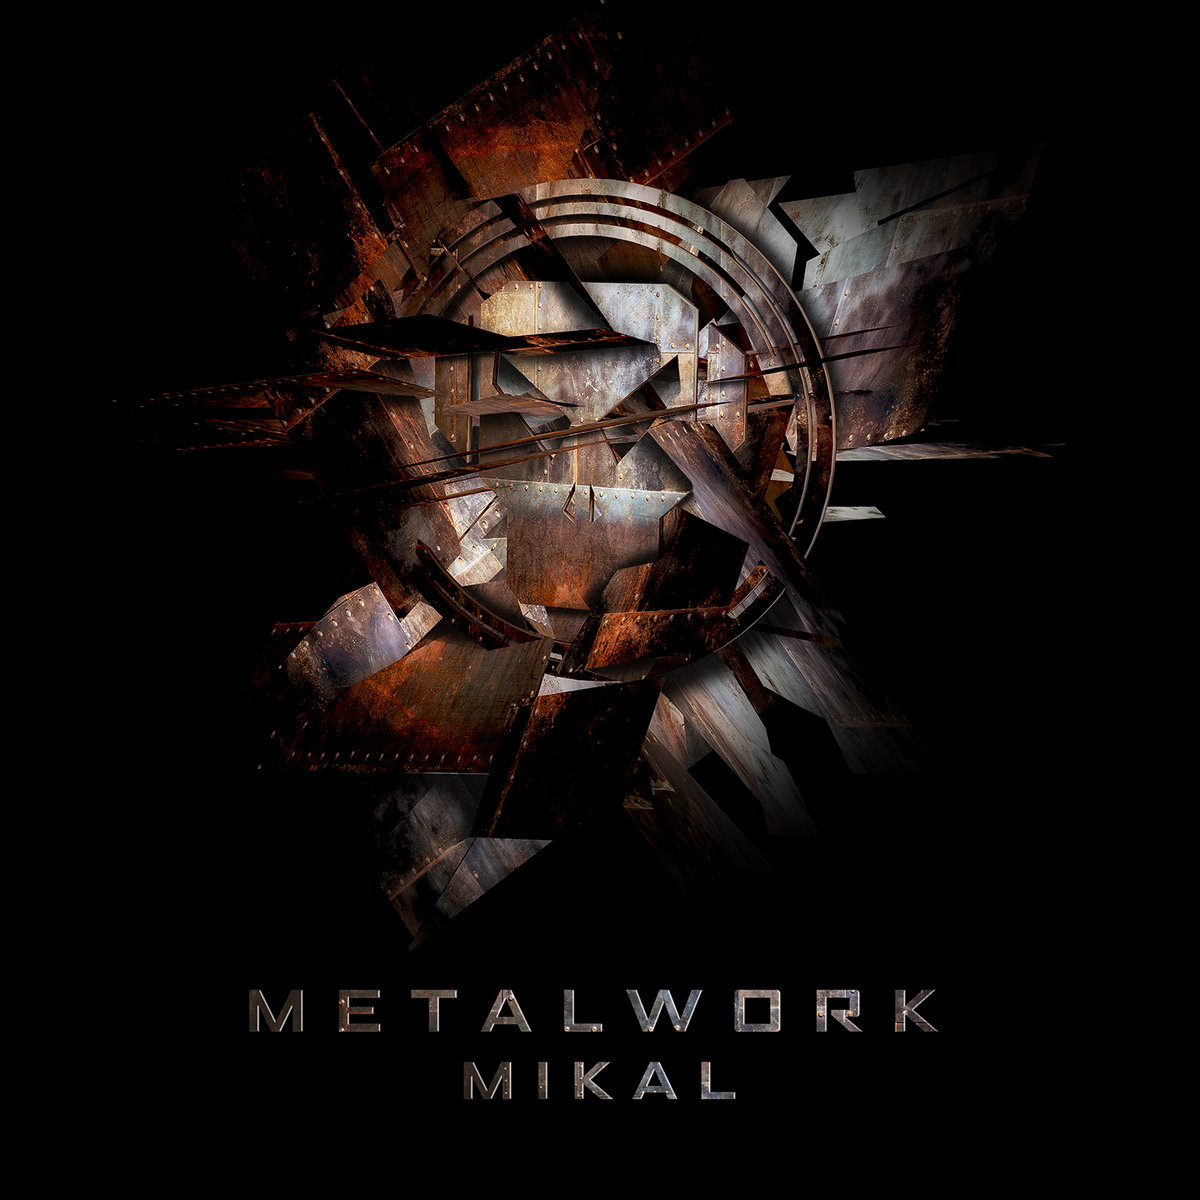 Mikal – Metalwork